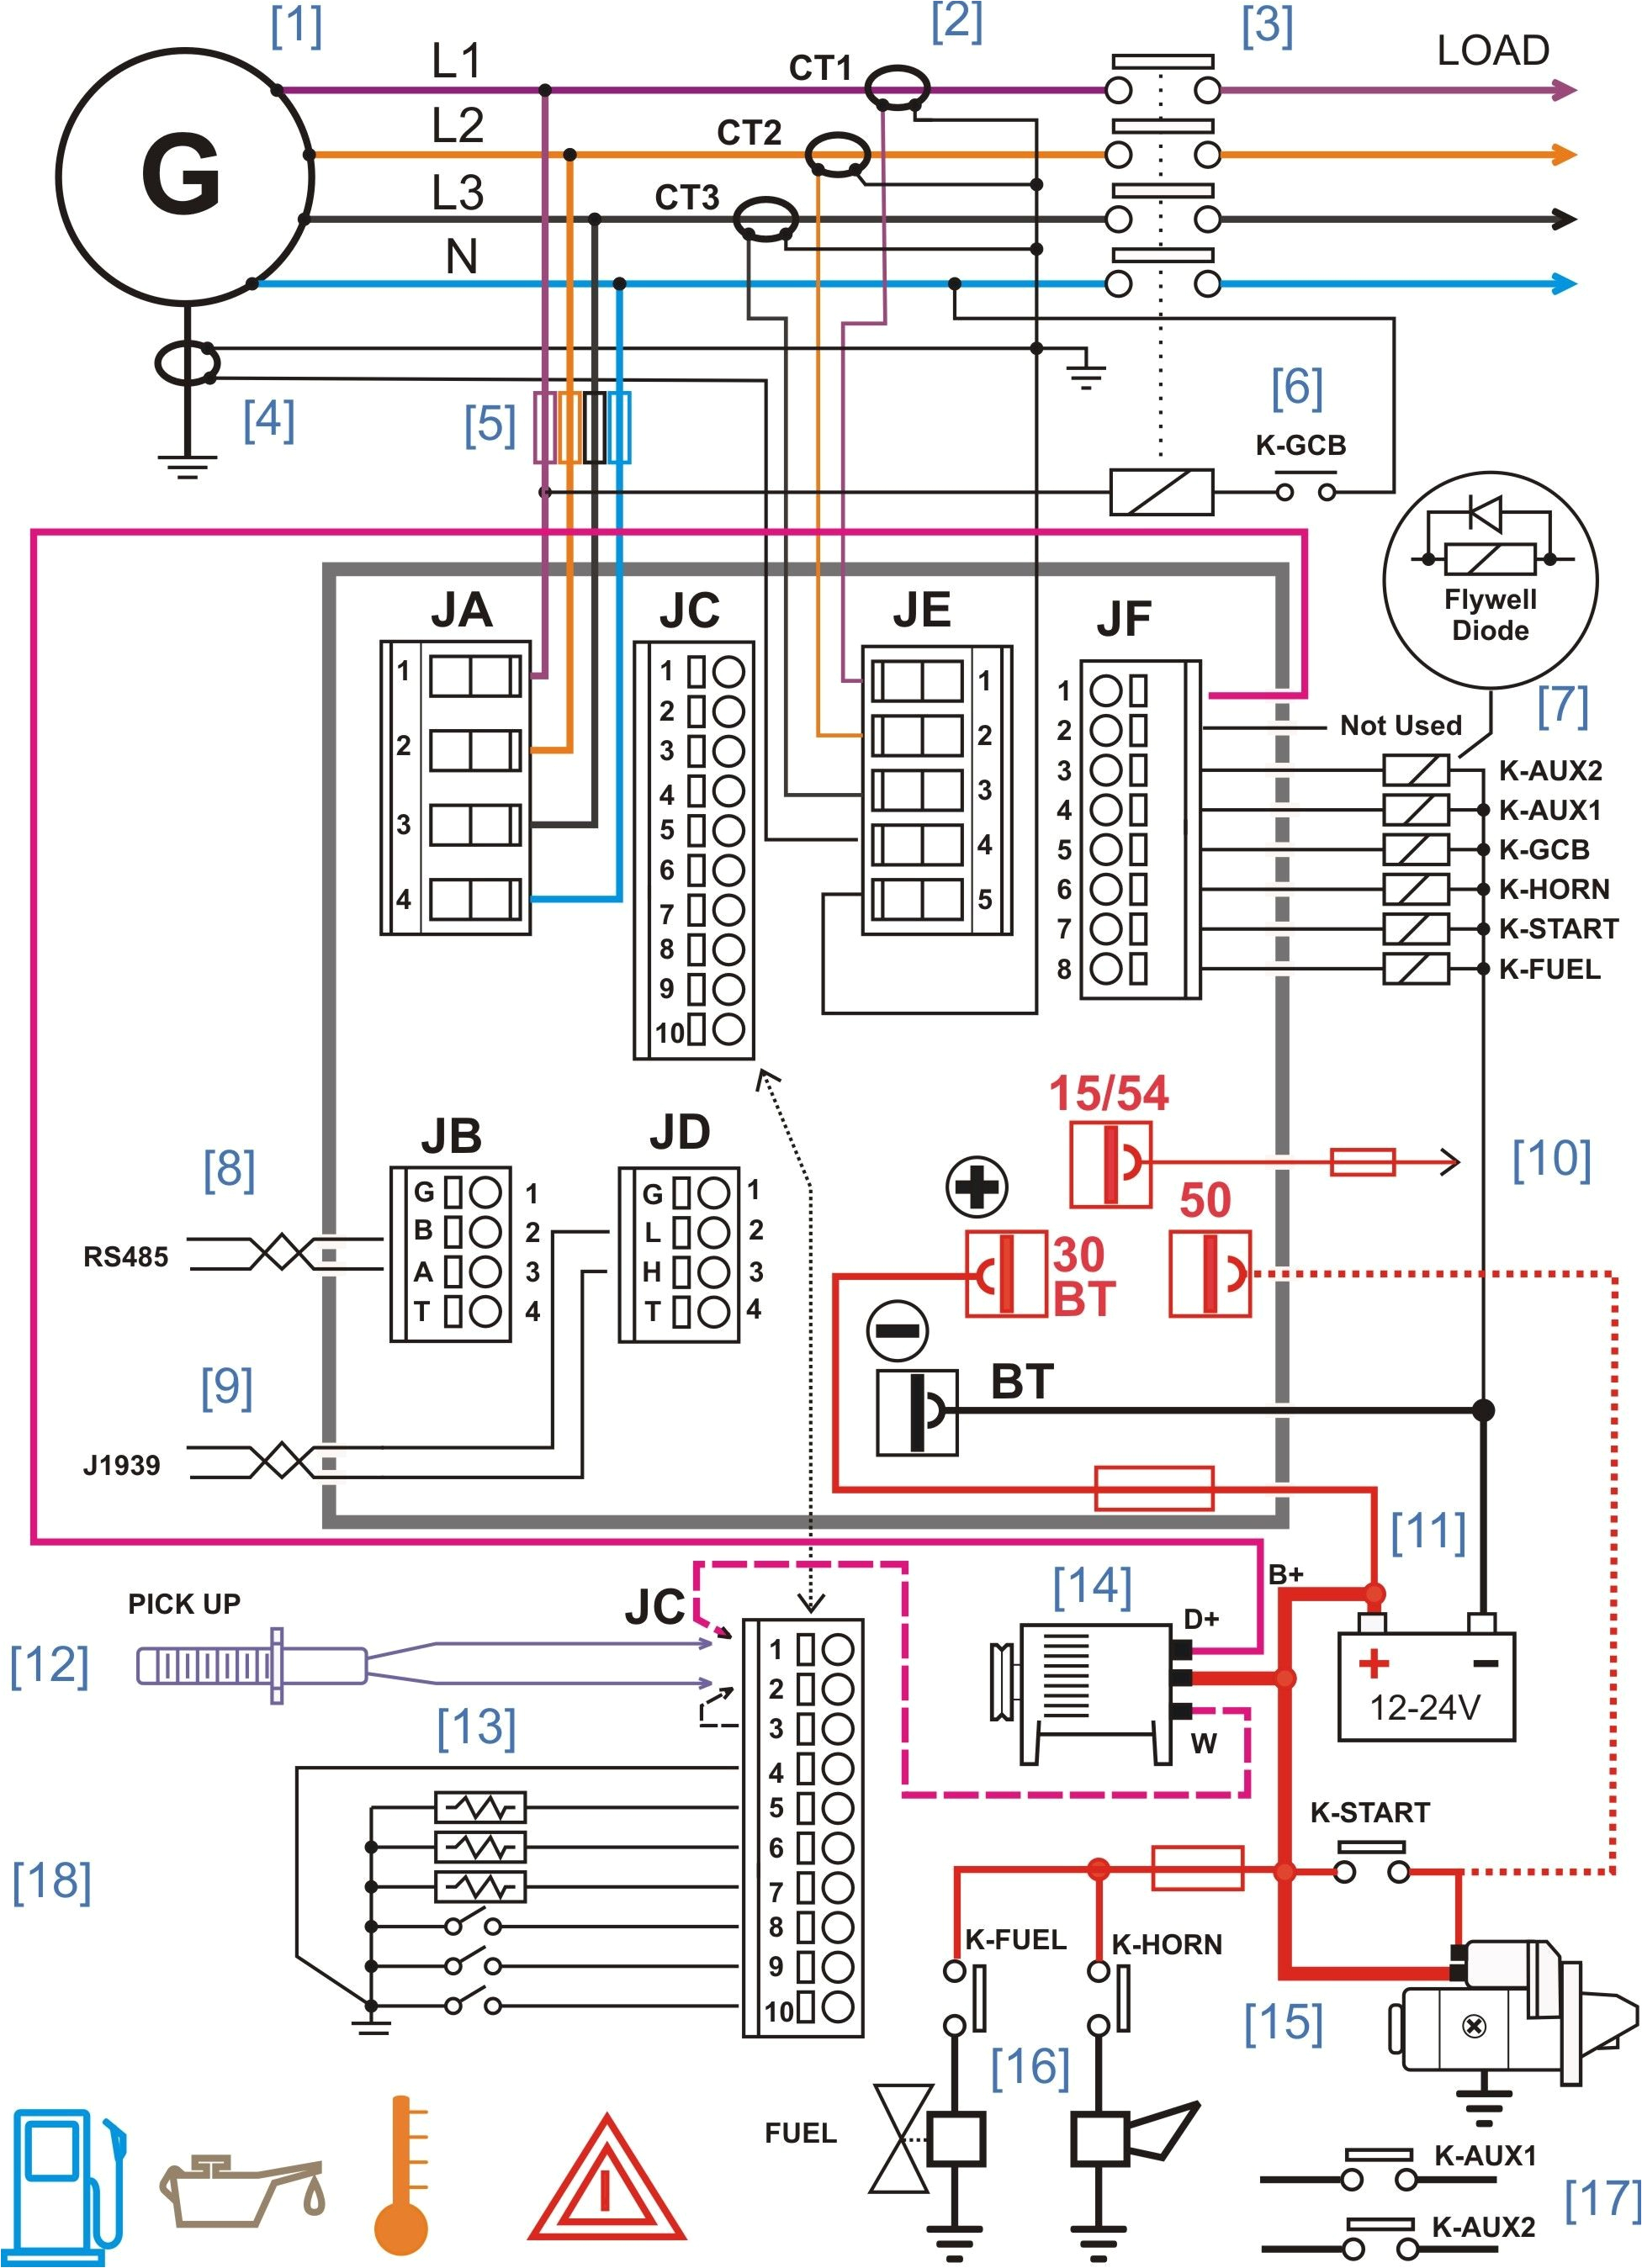 vcb panel wiring diagram pdf best of orenco systems control panel wiring diagram gallery jpg